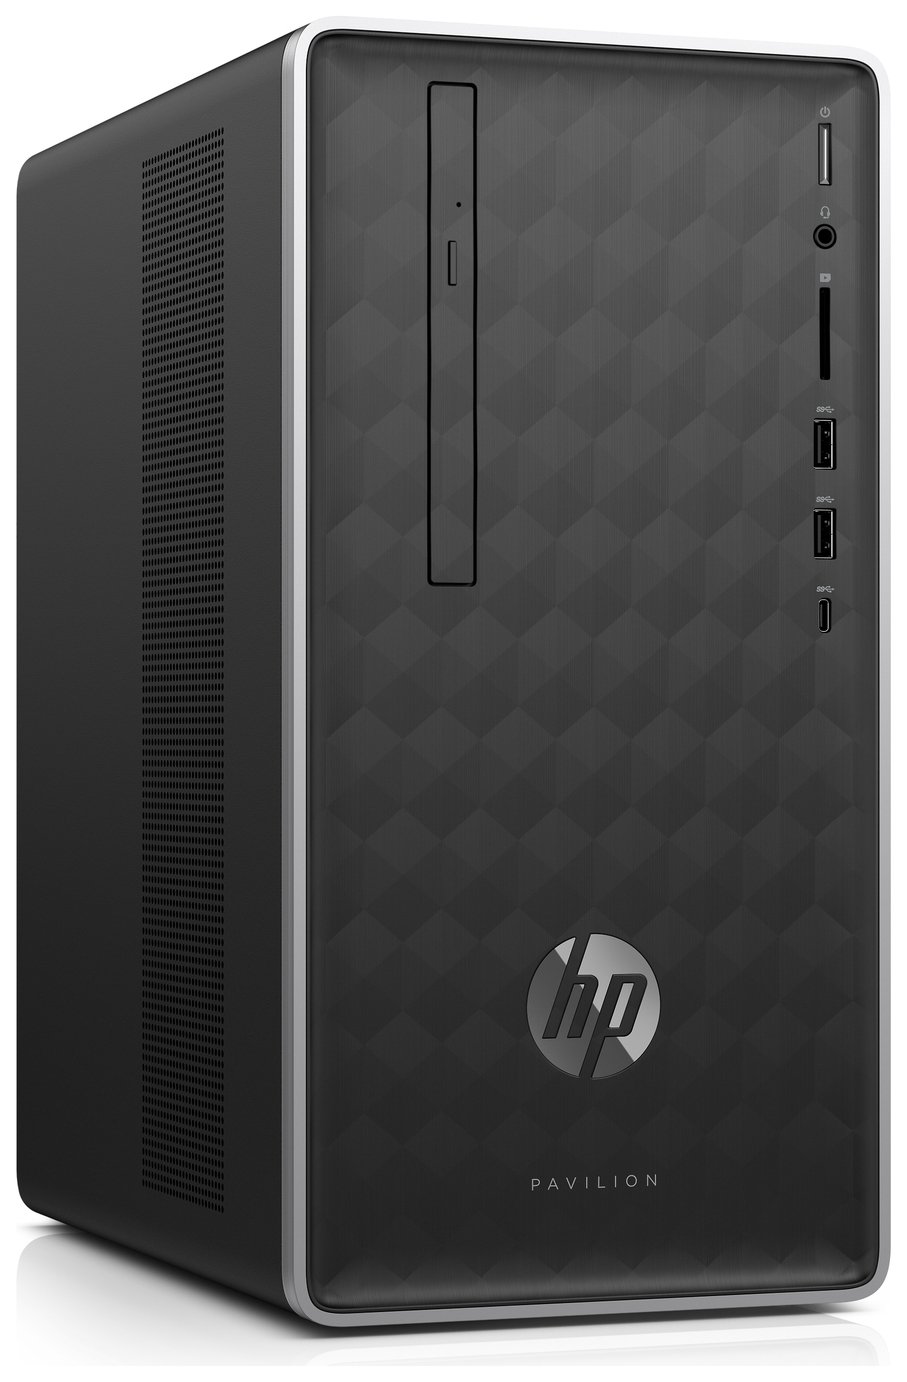 HP Pavilion i3 4GB 1TB Desktop PC review